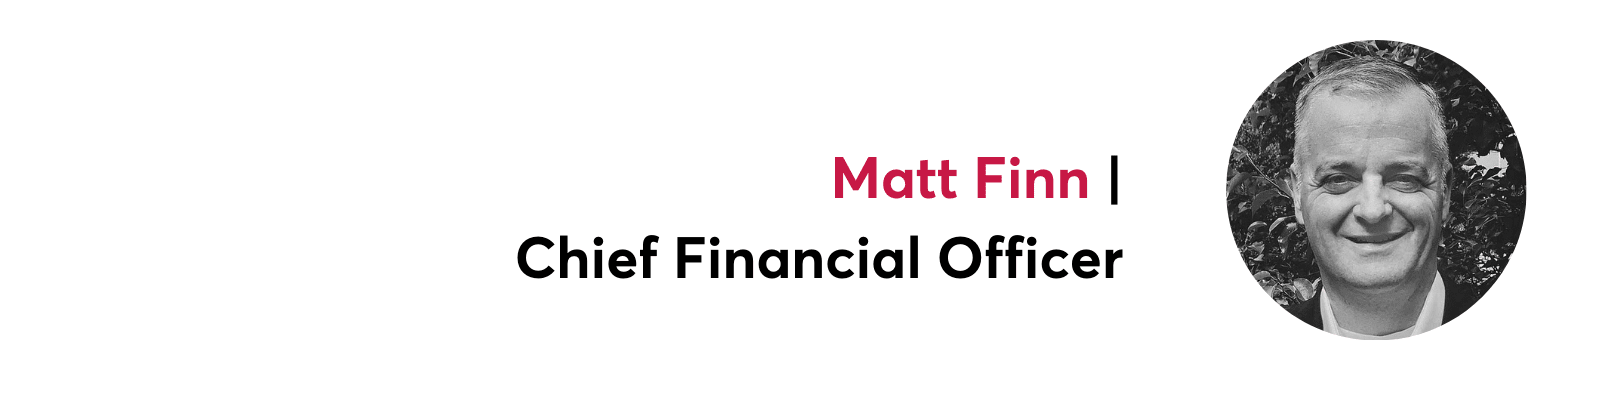 Black and white headshot of Matt Finn, Chief Financial Officer